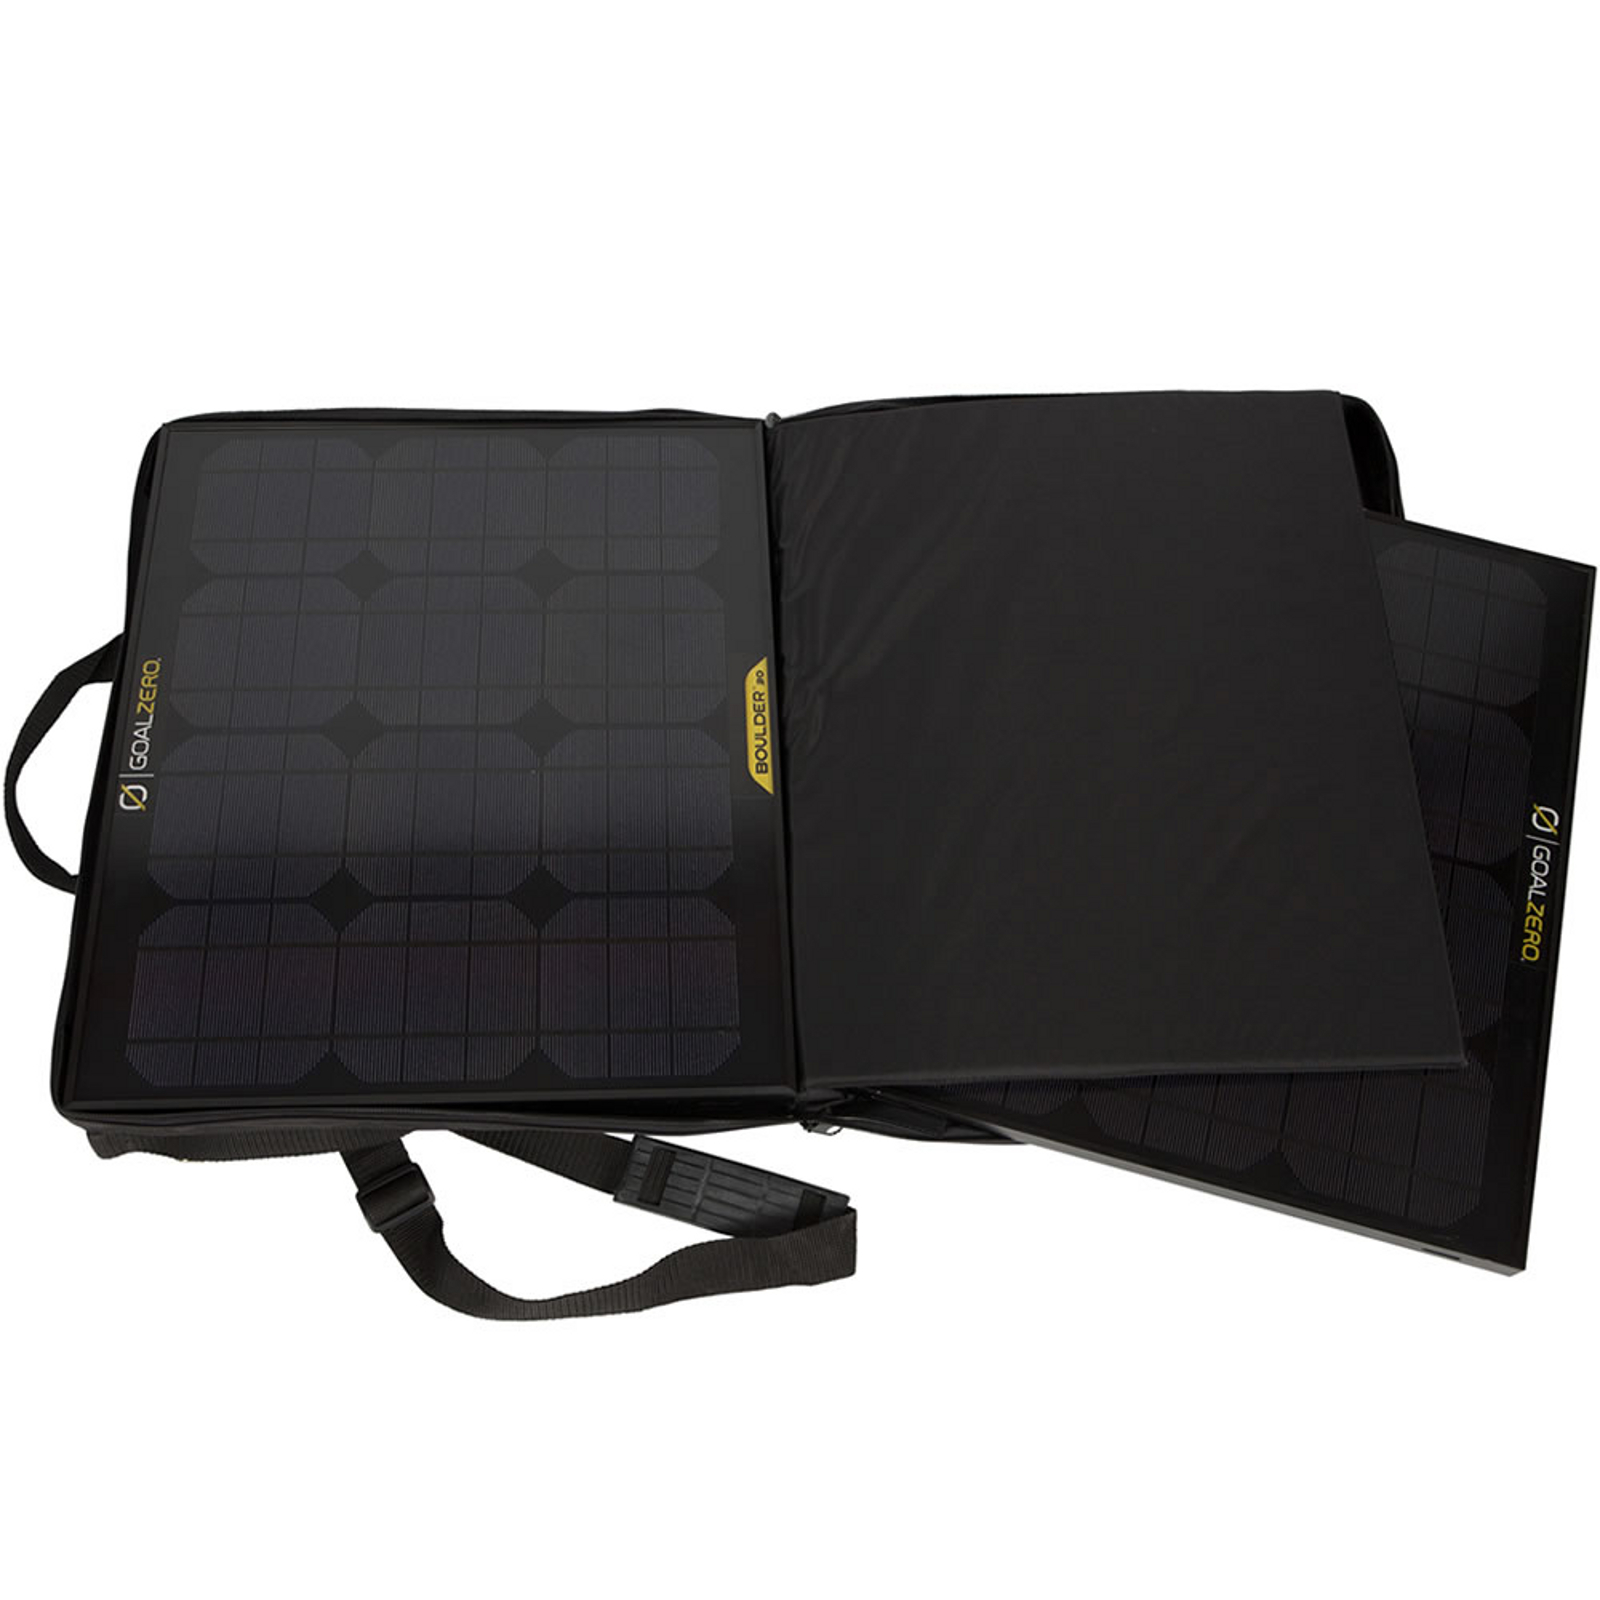 Solar Kit for Yeti 1250